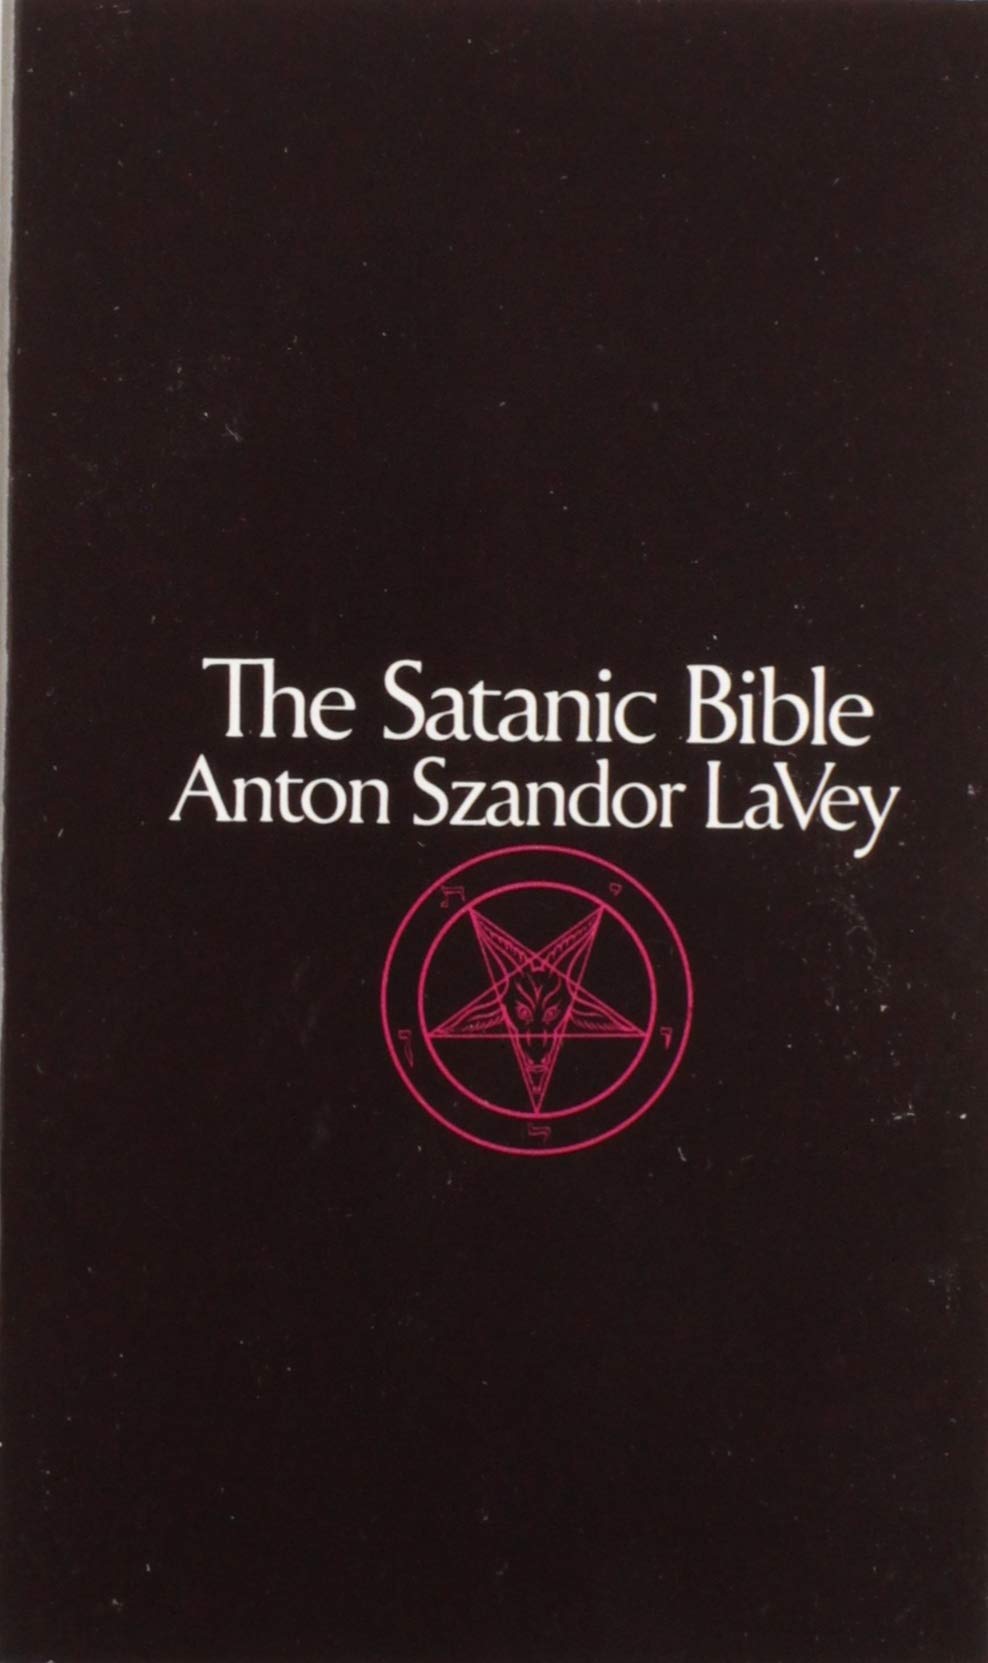 The Satanic Bible by Anton Szandor Lavey